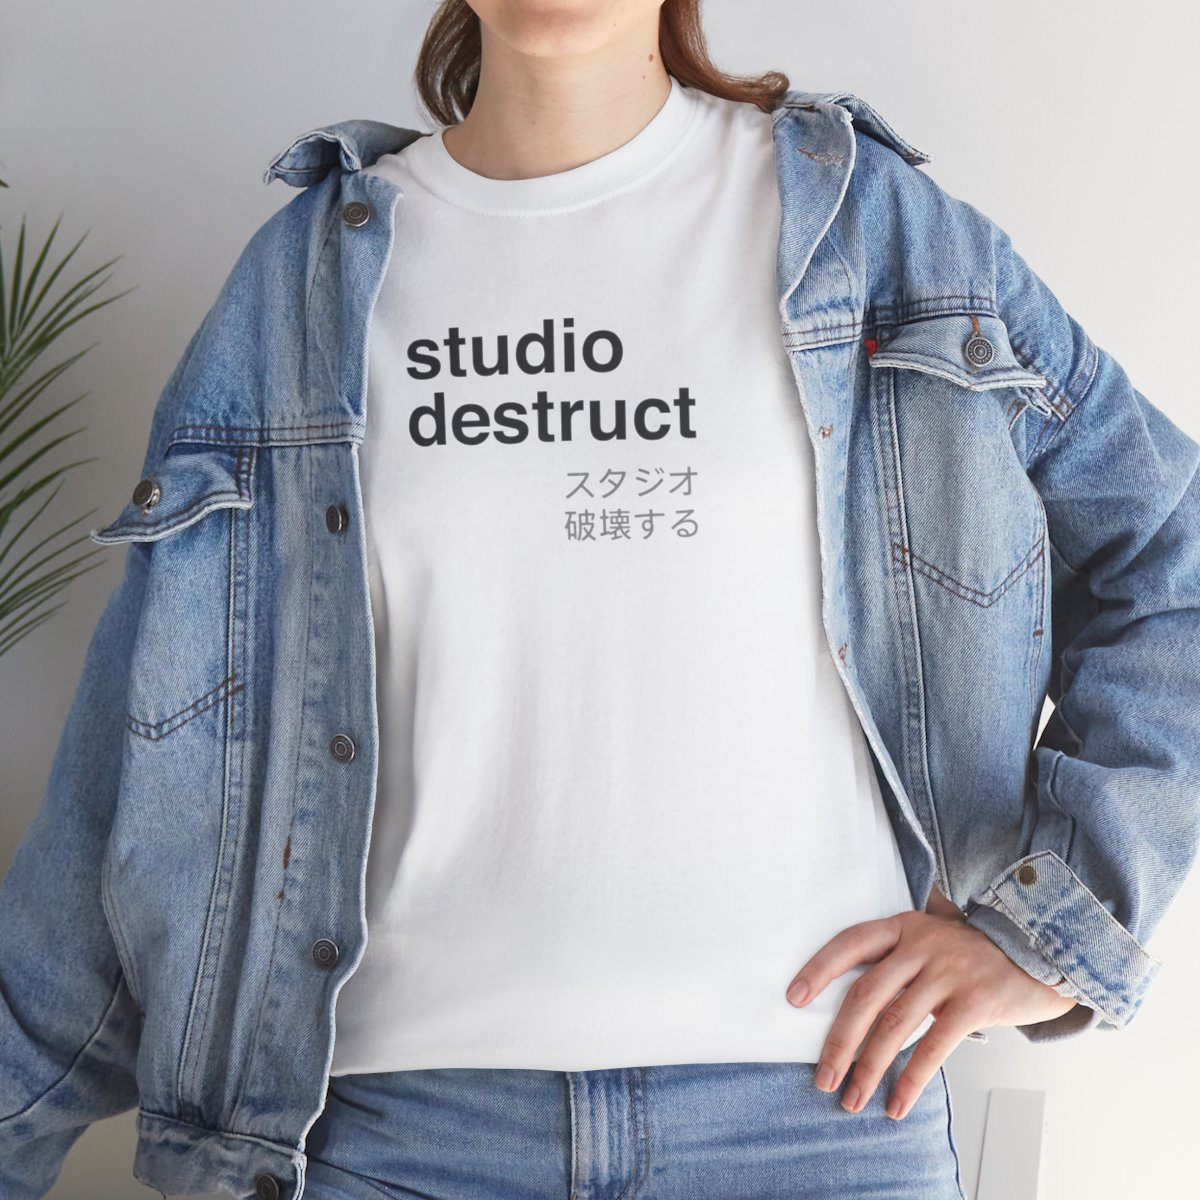 Studio Destruct LITE T-Shirt product thumbnail image